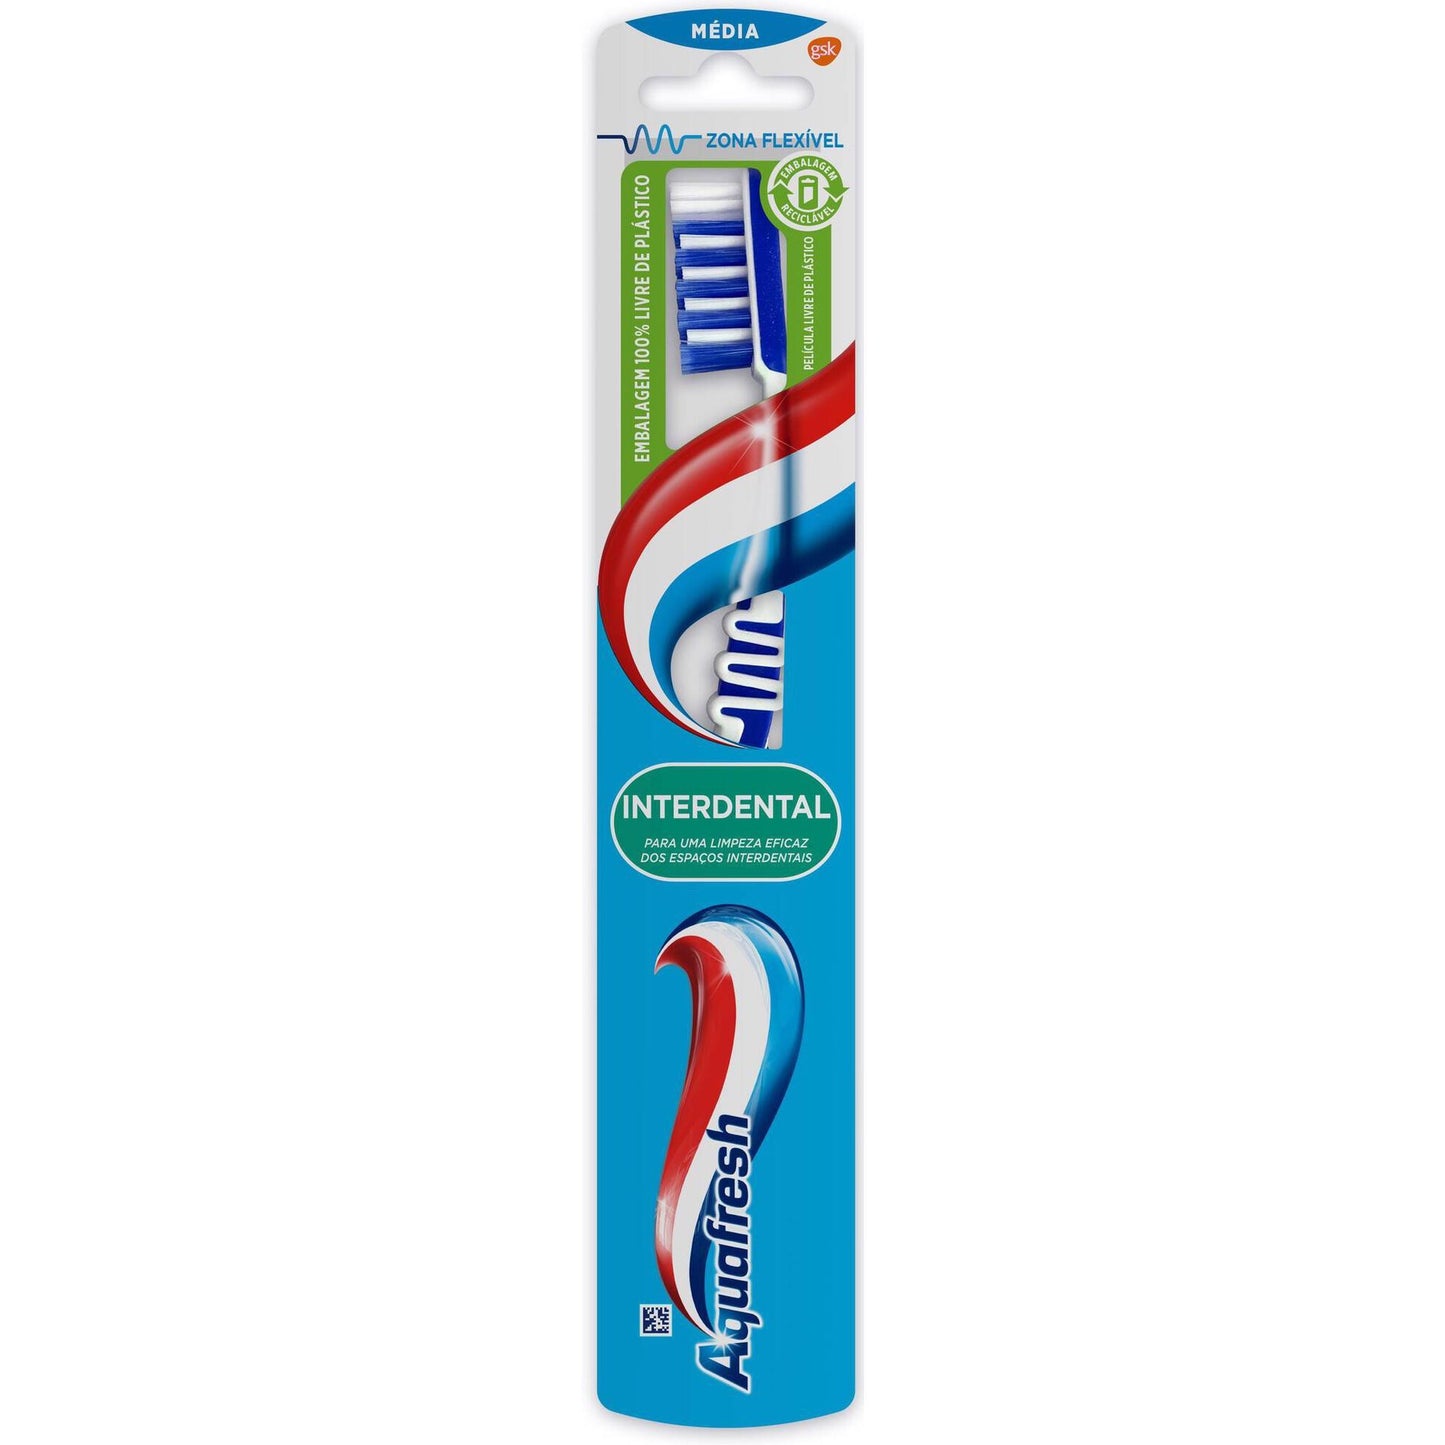 Medium Interdental Toothbrush Aquafresh